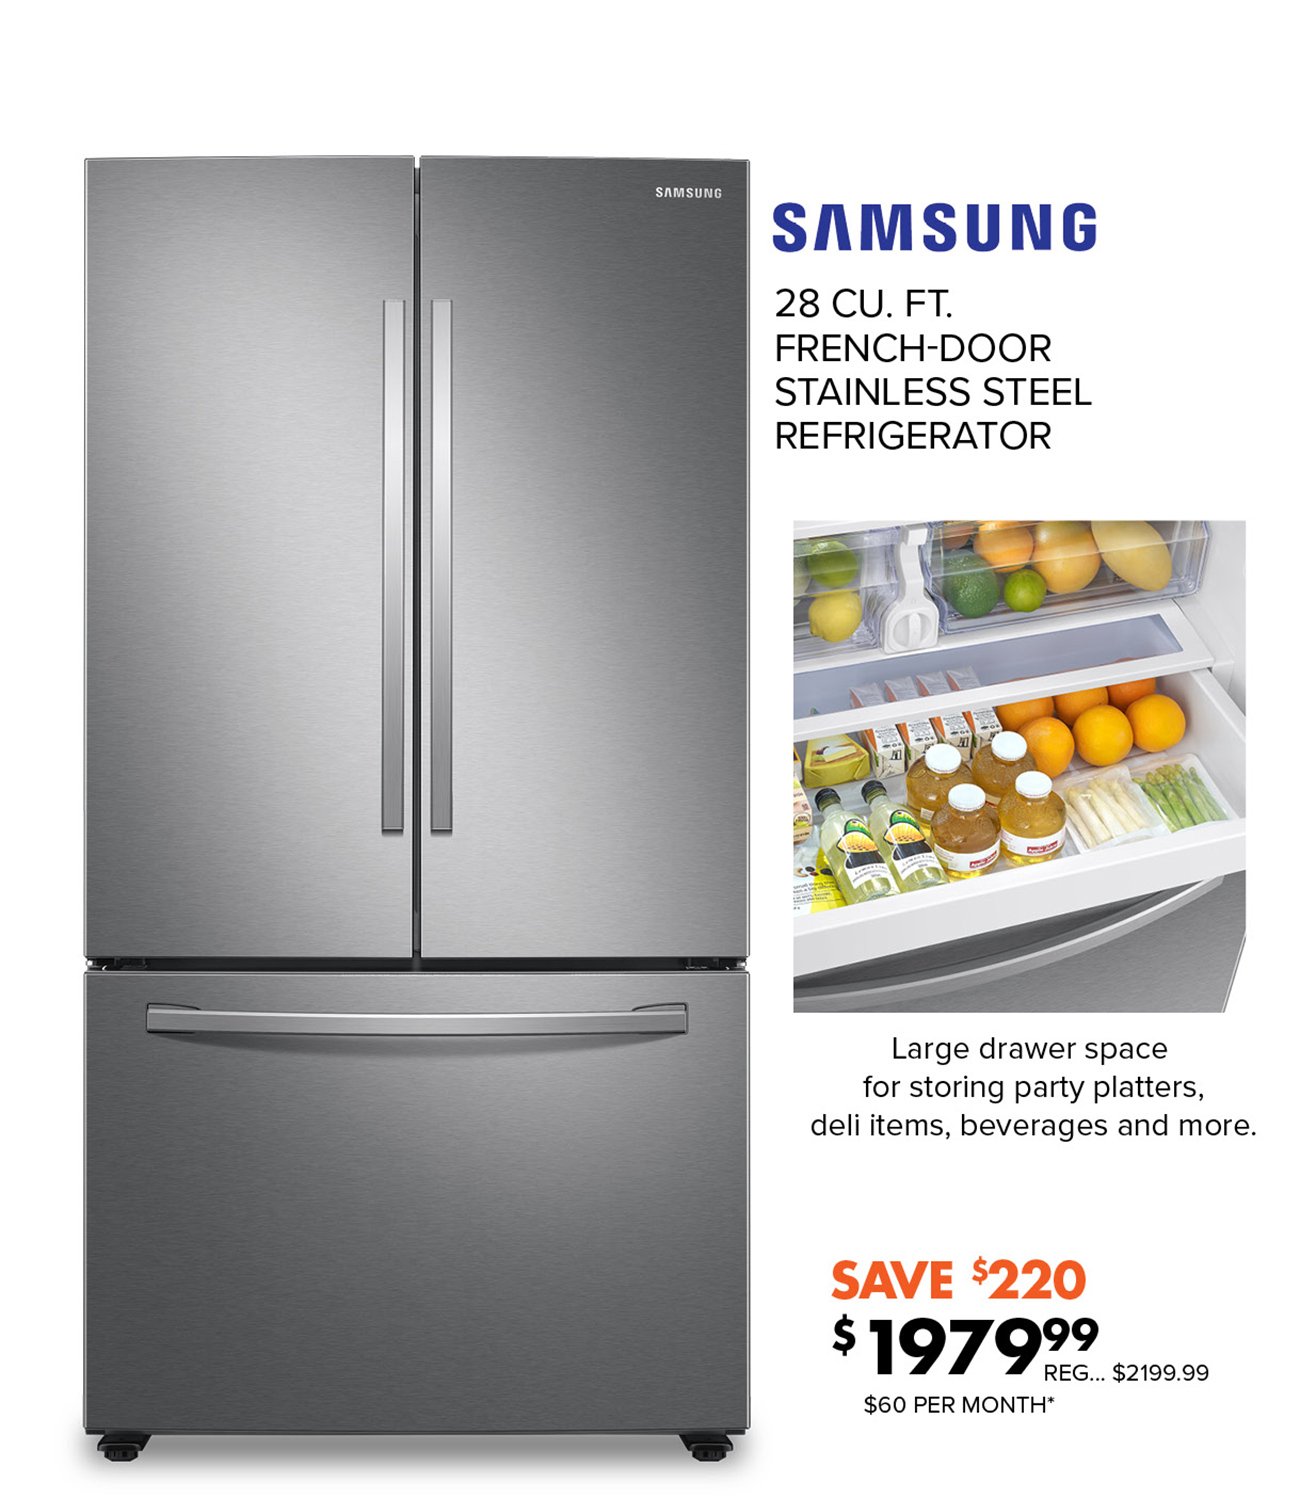 Samsung-french-door-refrigerator